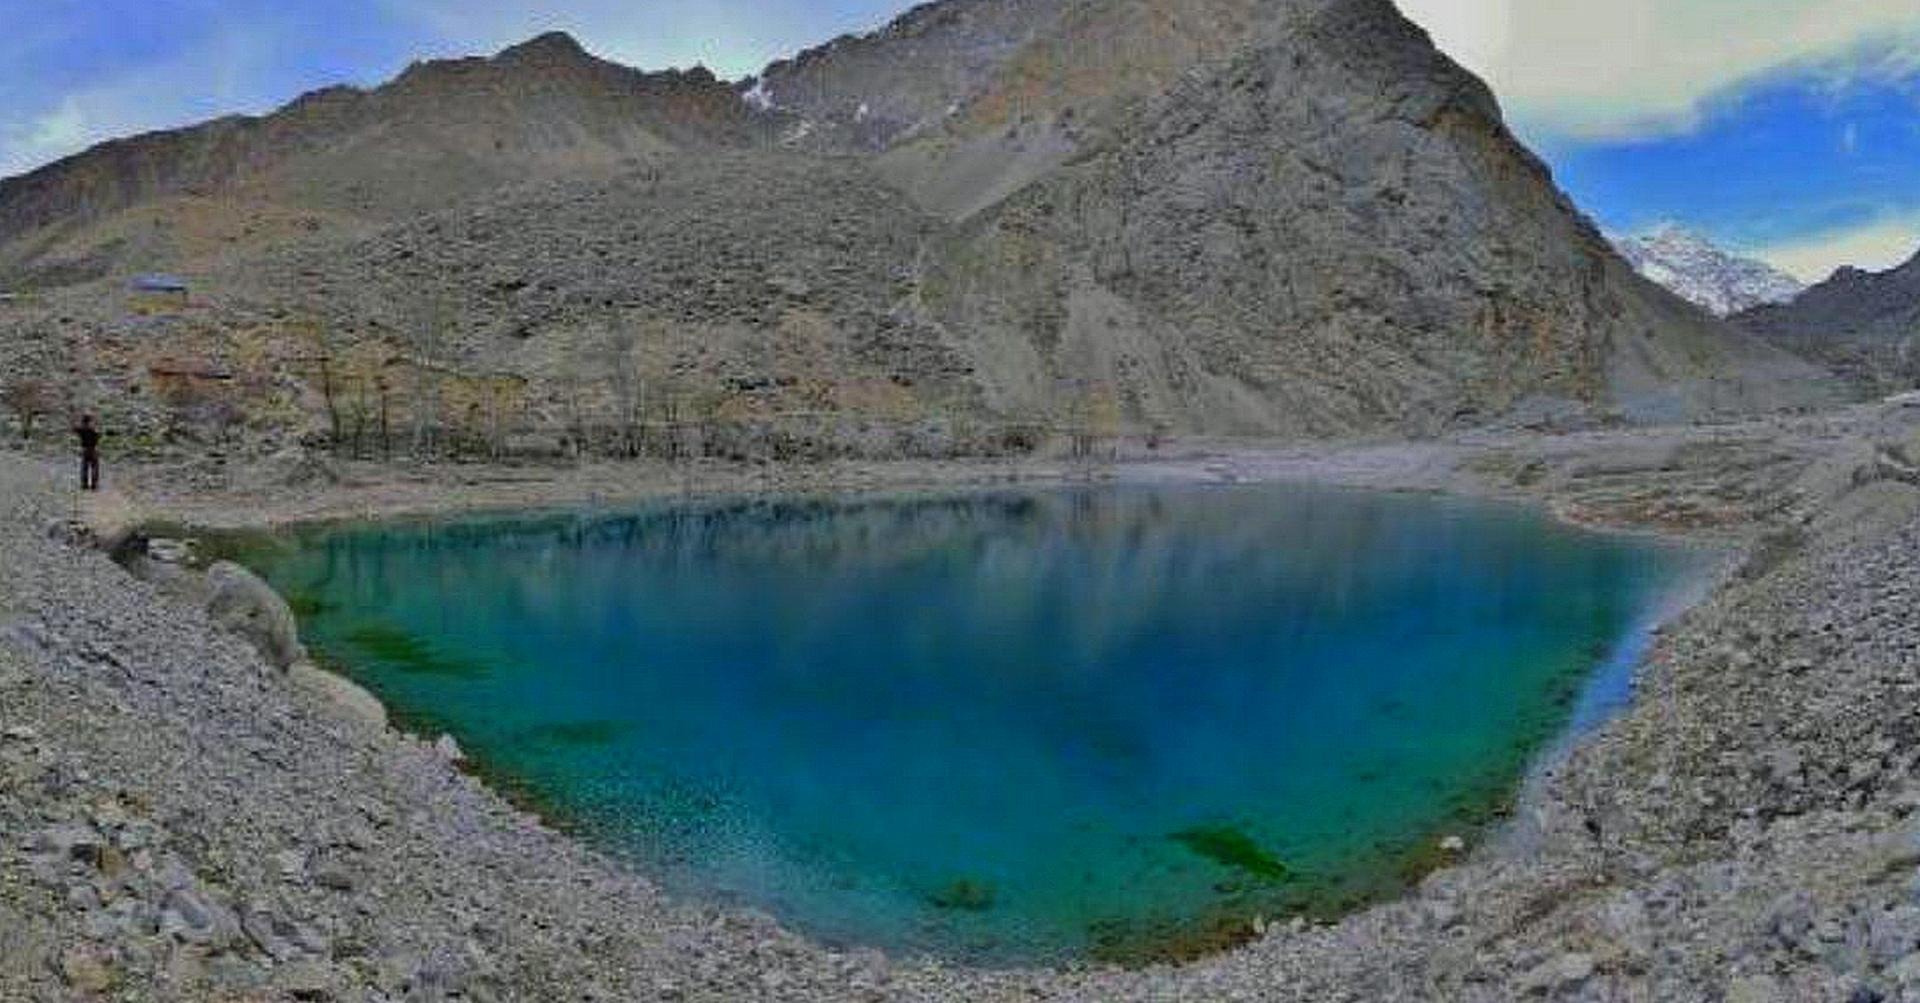 Деревня кули. Озеро Чатыр Куль. Ледник Иссык-Куль. Таджикистан Иссык-Куль. Озеро Хафткул Таджикистан.